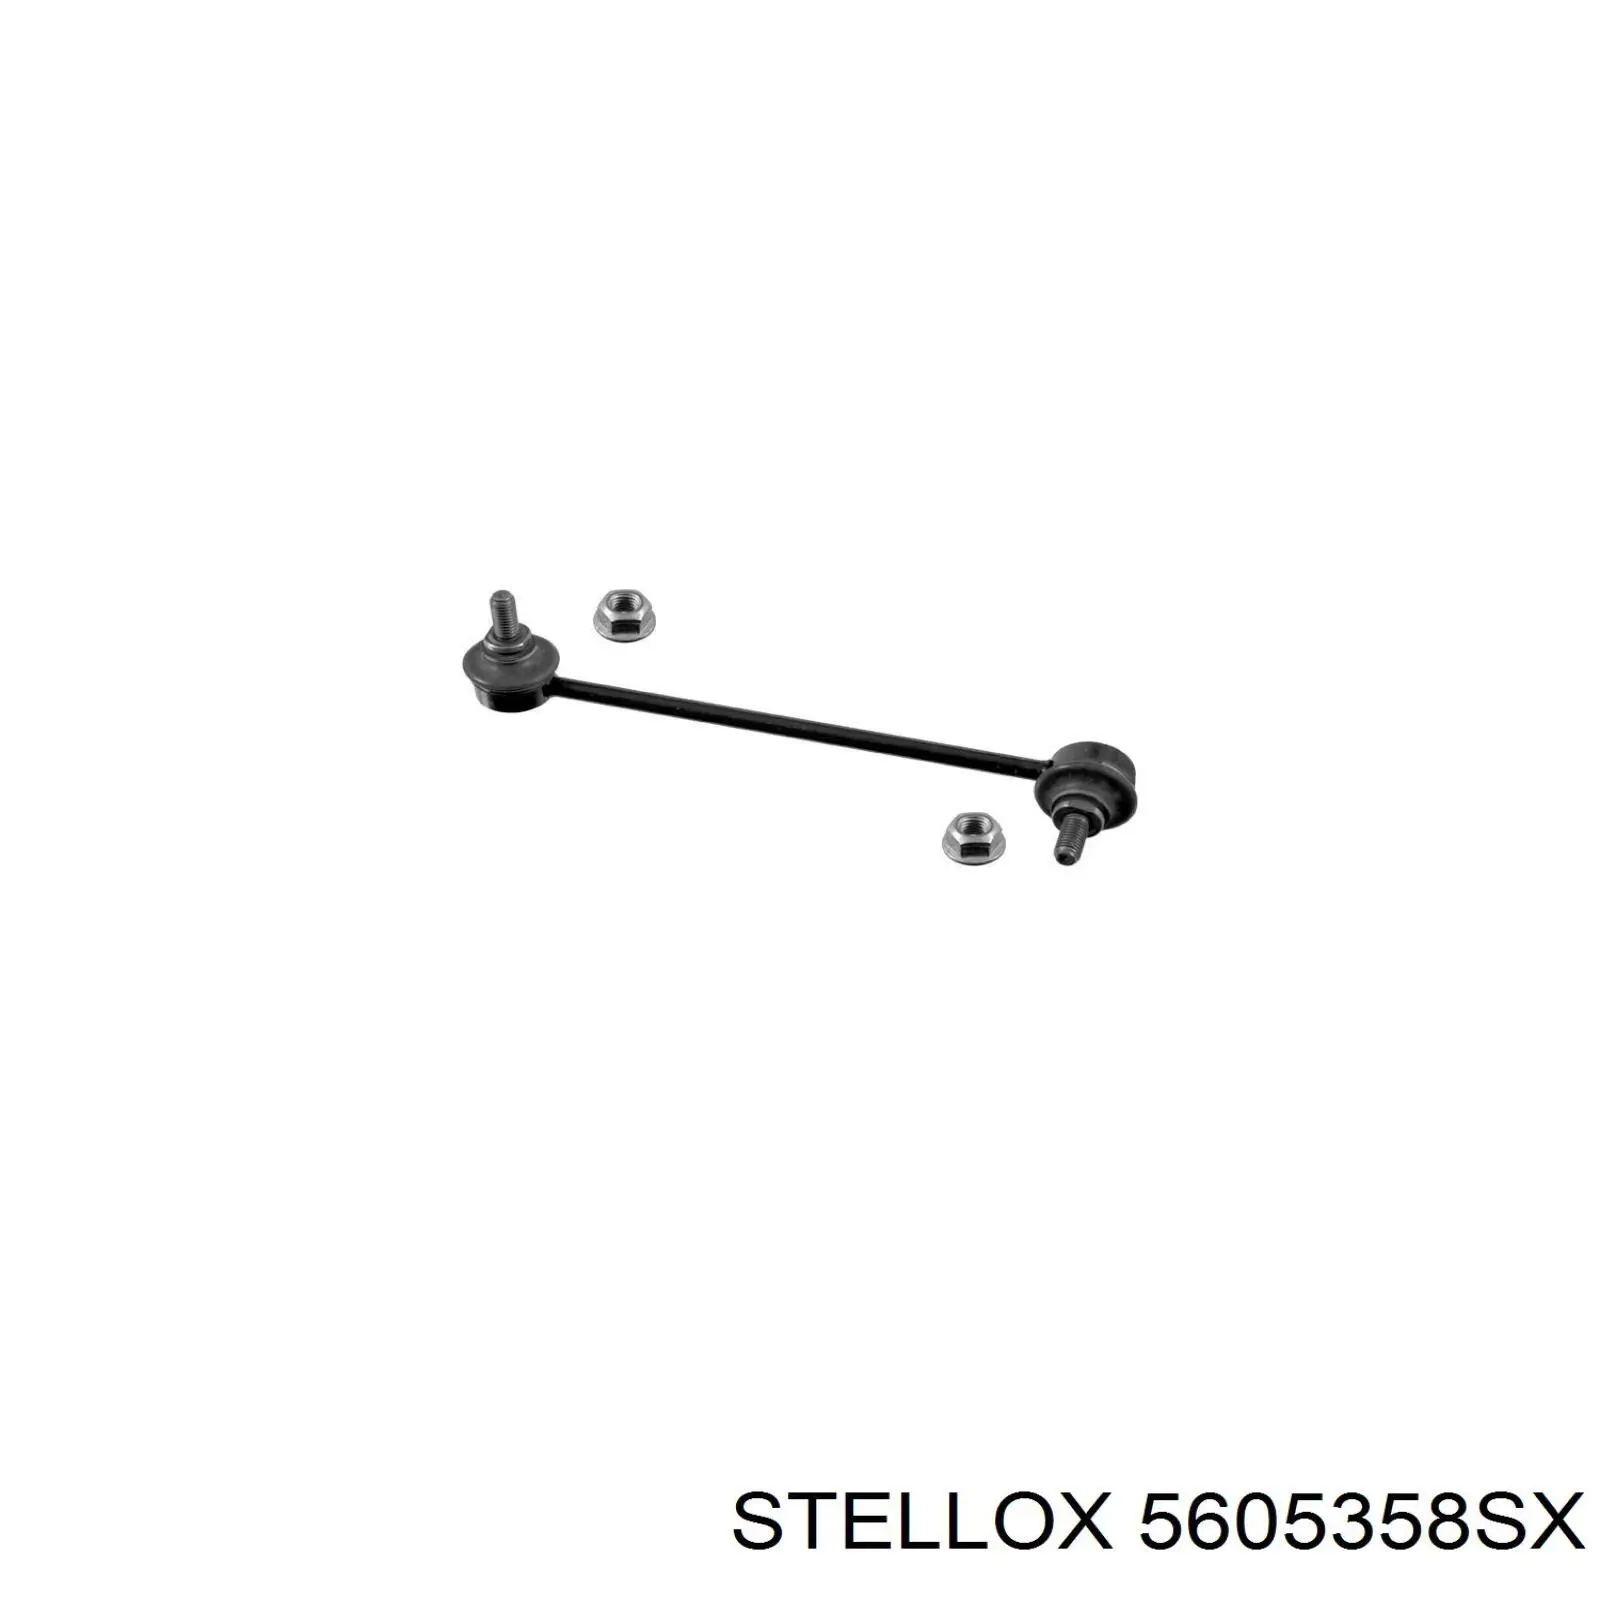 5605358SX Stellox barra estabilizadora delantera derecha